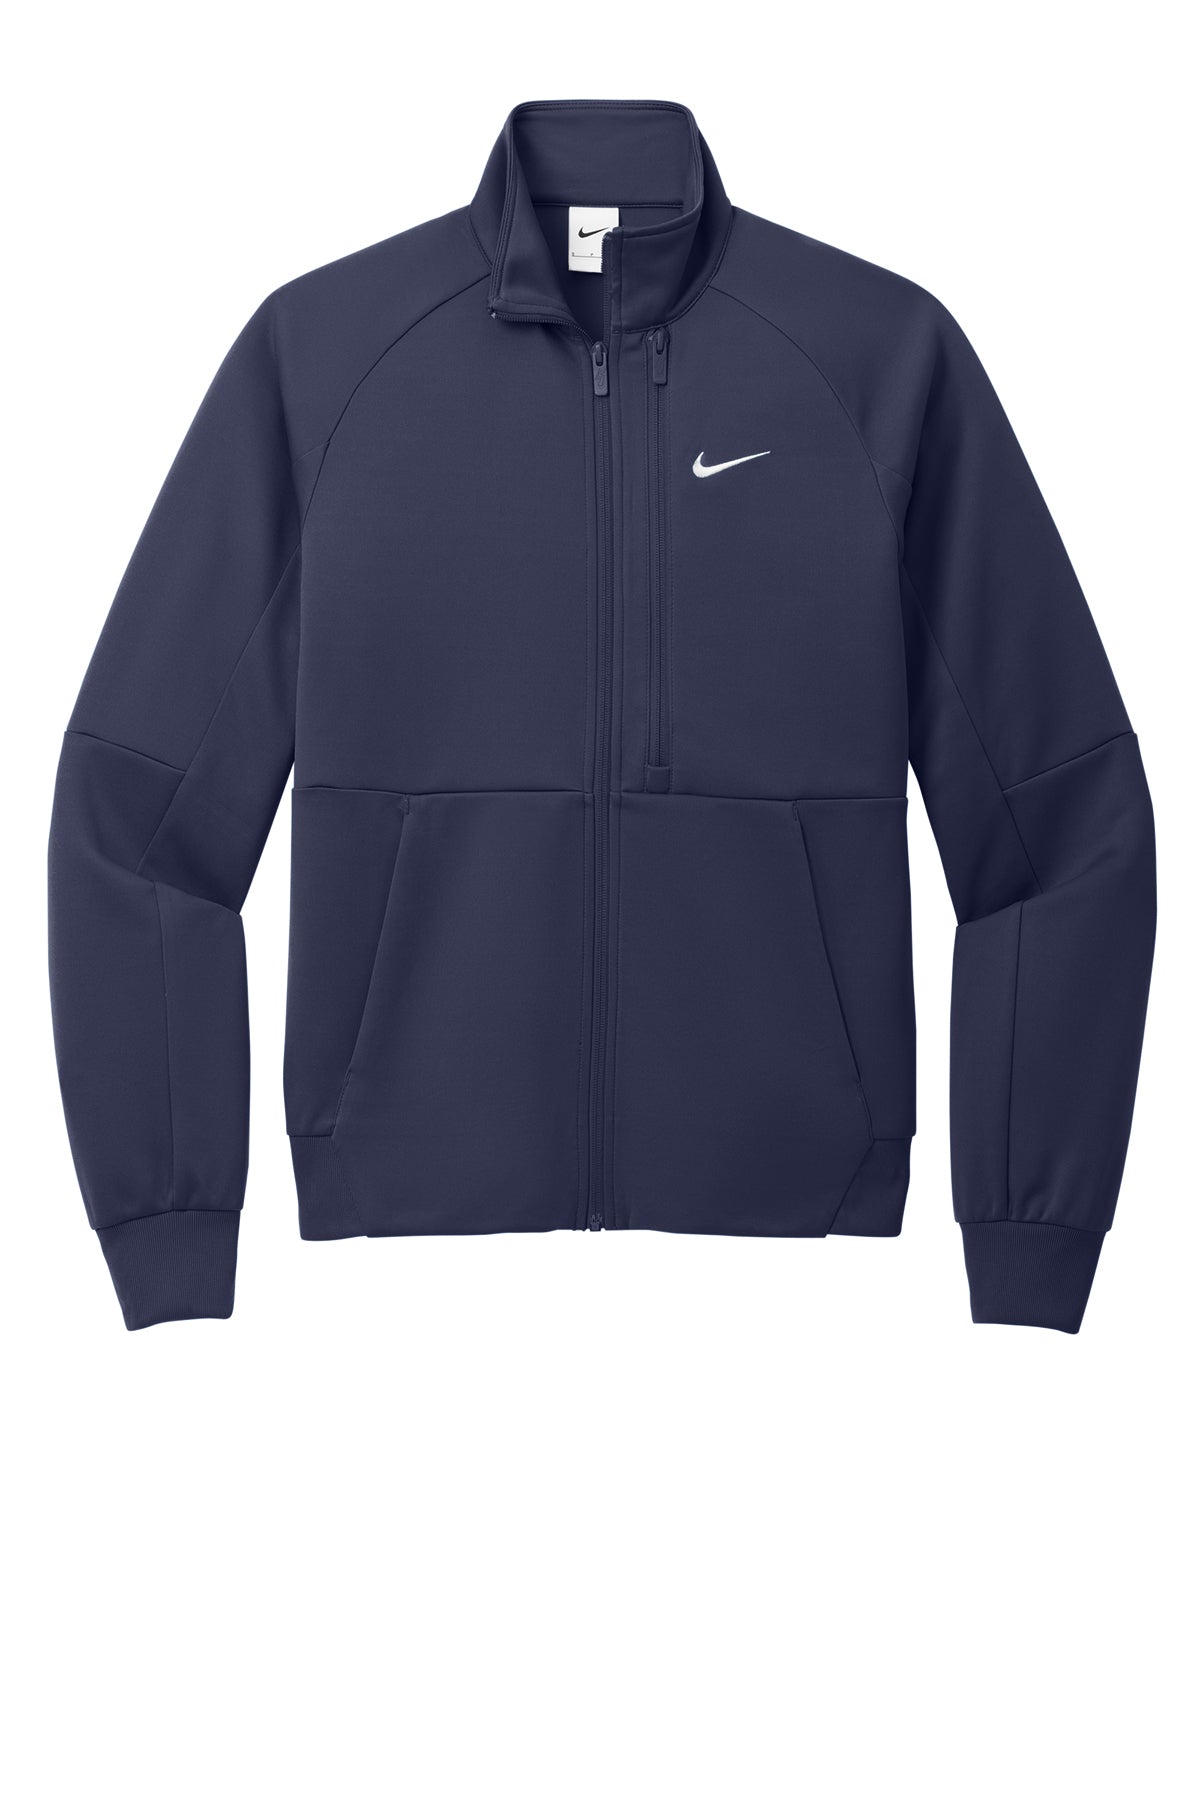 Sample Nike Full-Zip Chest Swoosh Jacket